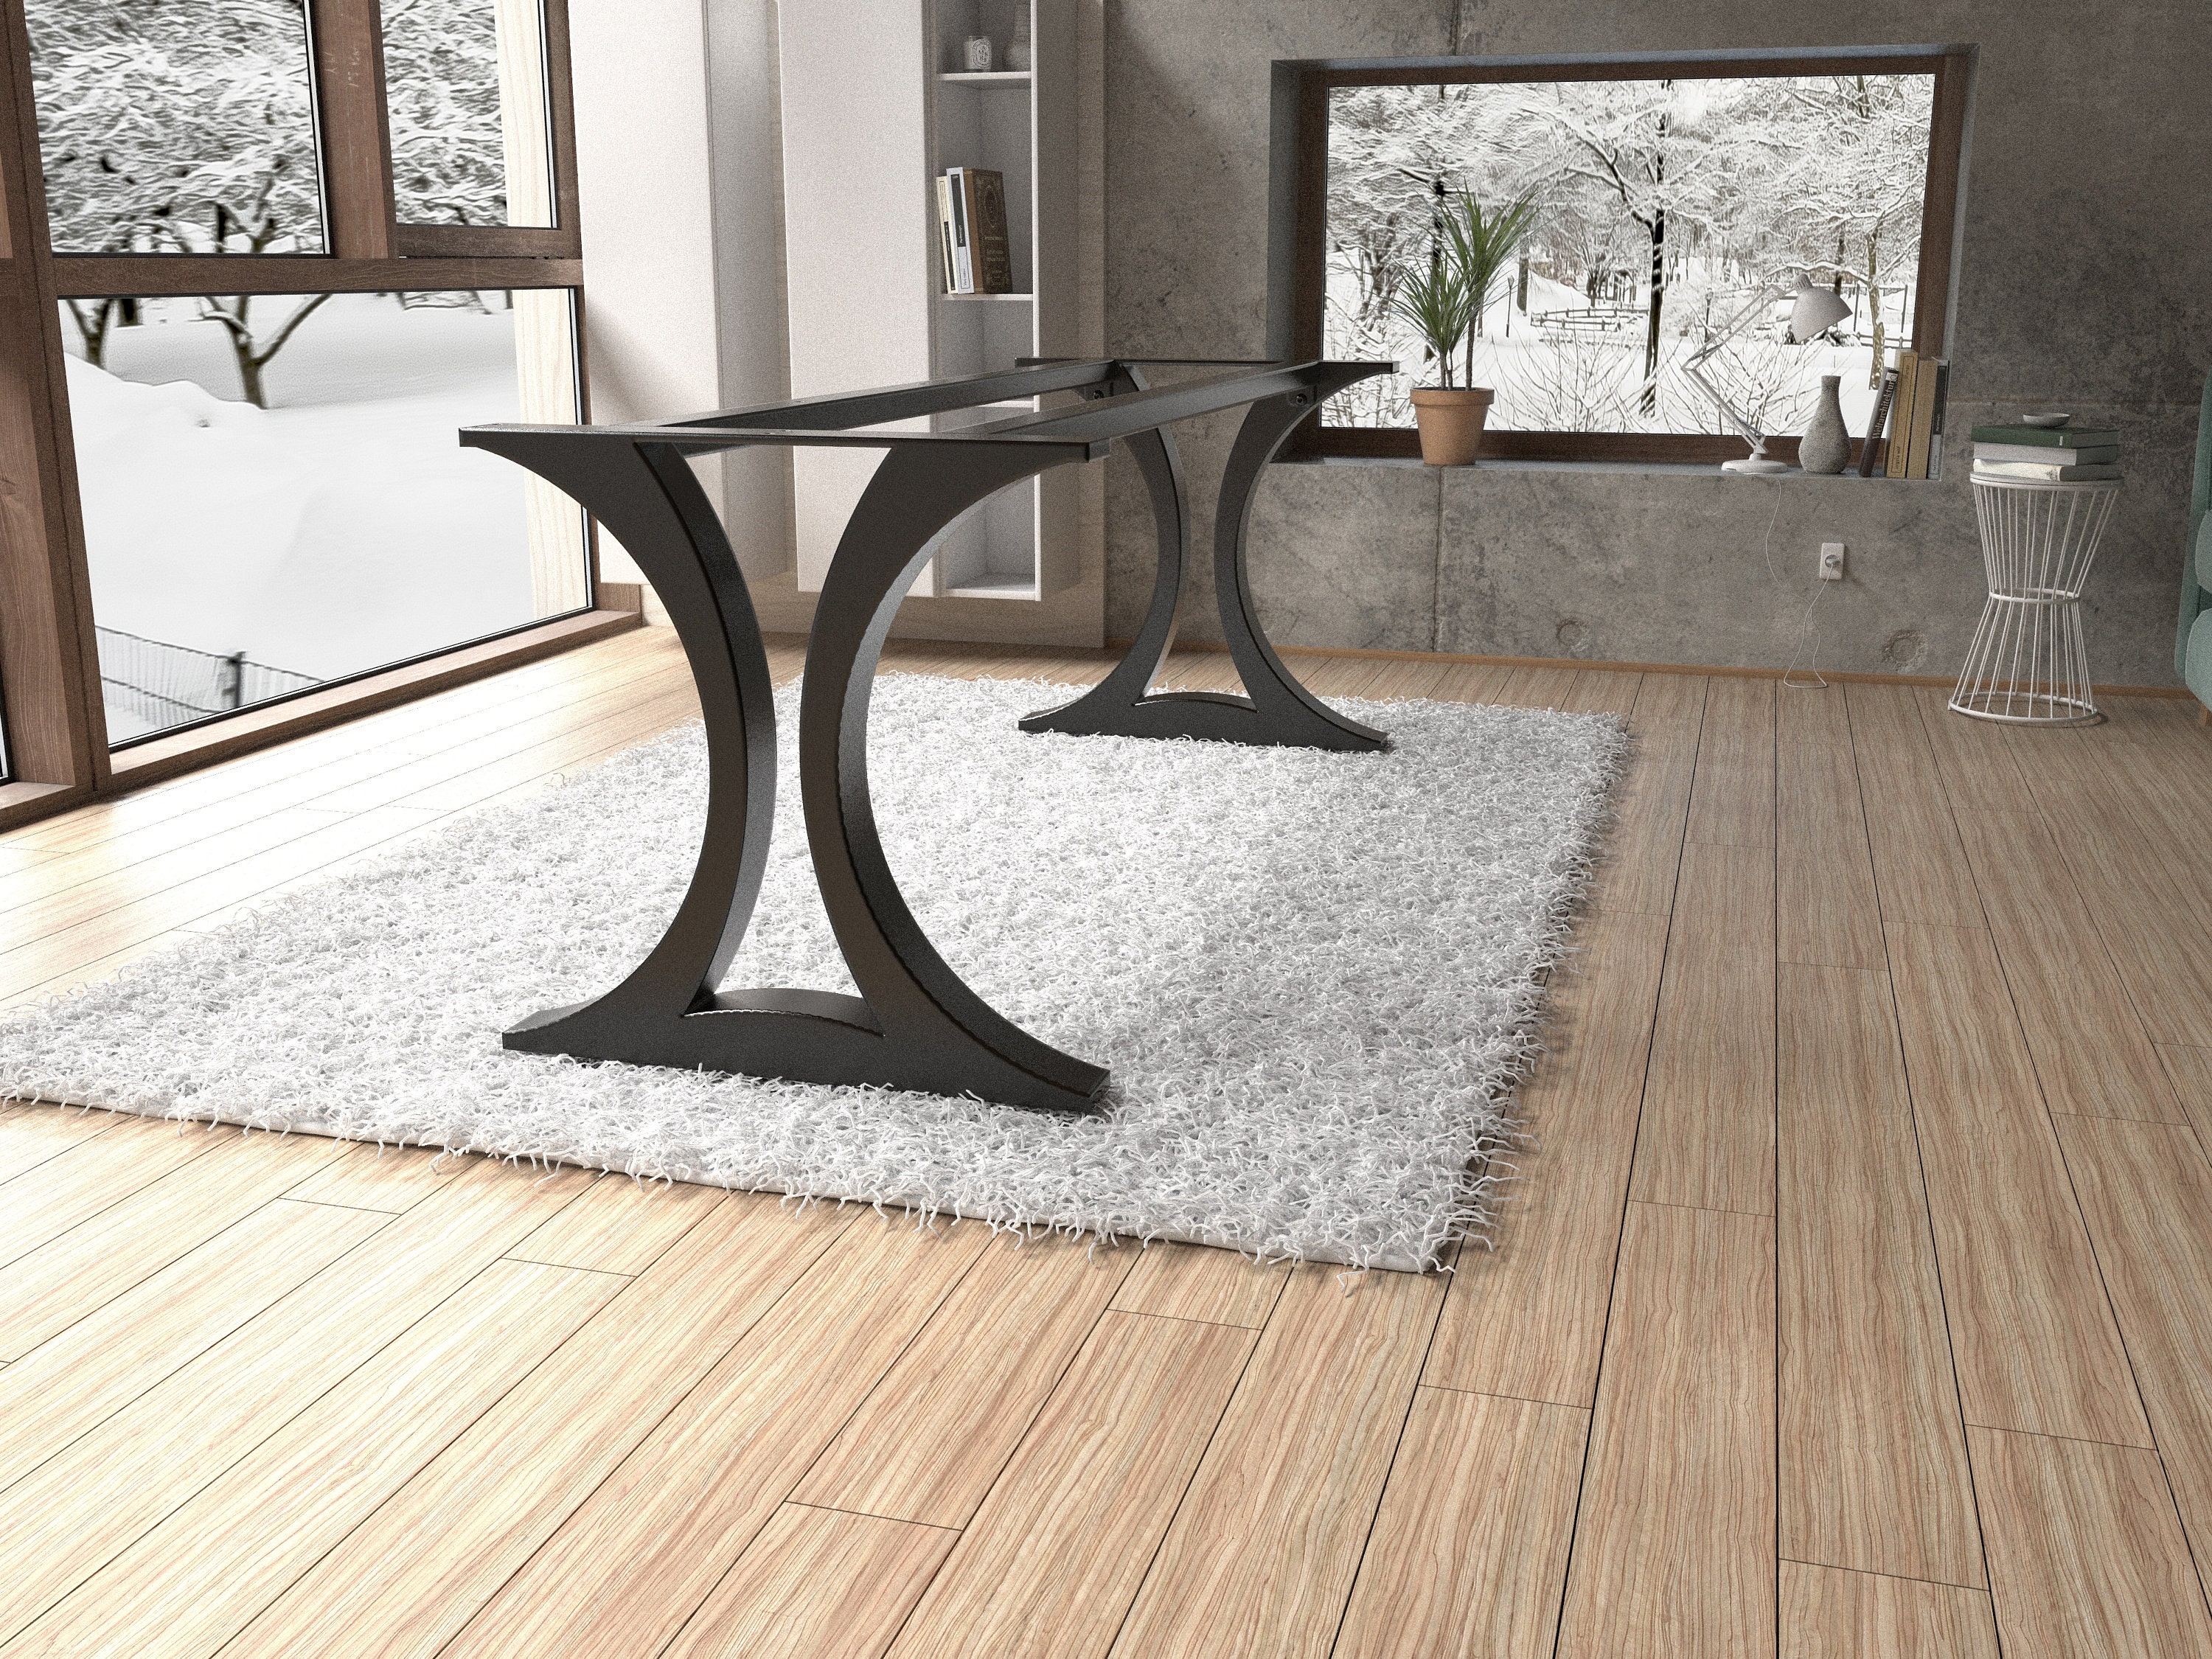 Natural Metal C Side Table. Slide Under Sofa Table. Minimal